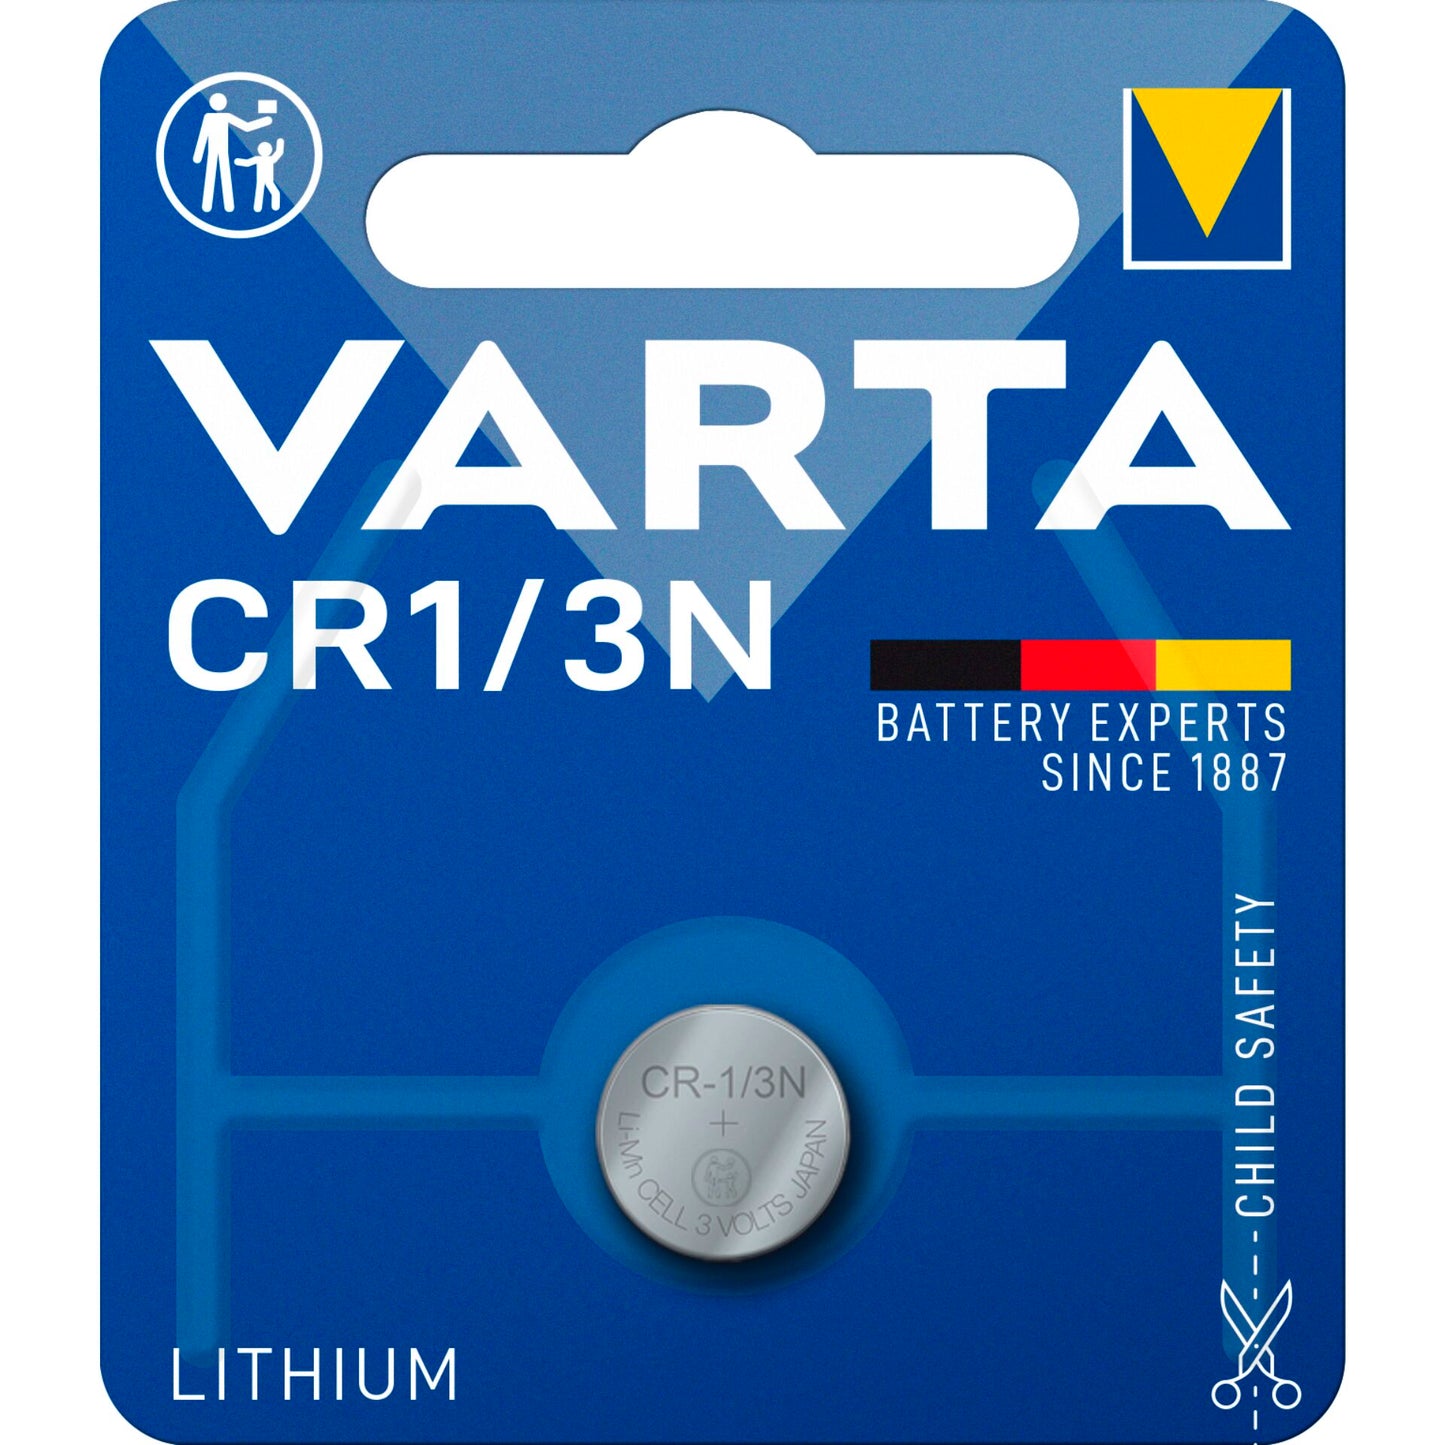 Varta CR1/3N 3V Lithium Battery